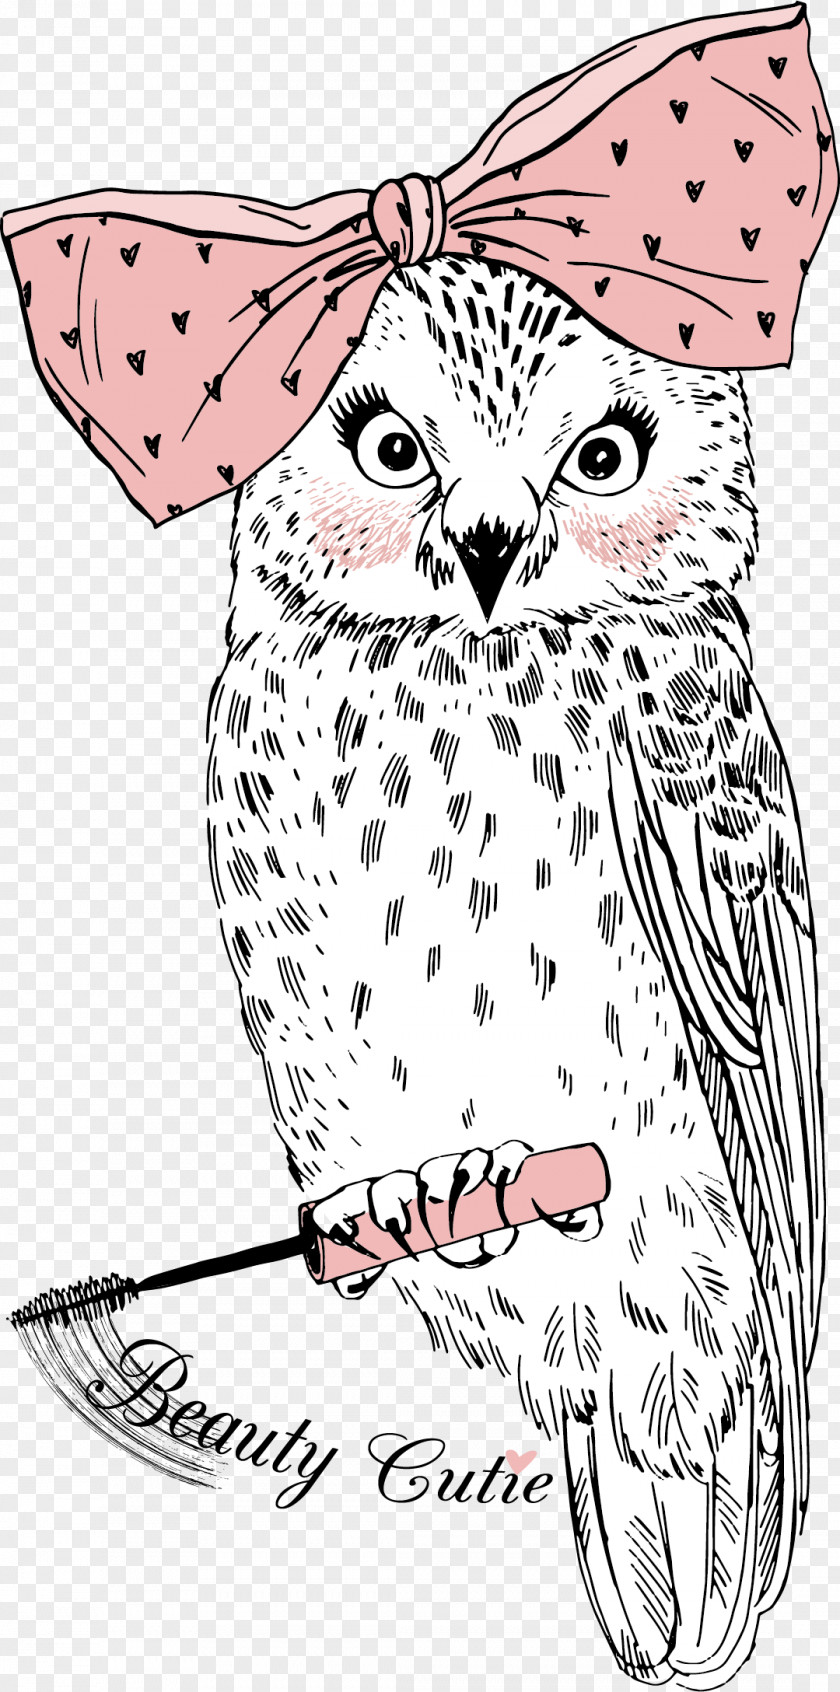 Cartoon Owl Vector IPod Touch Clip Art PNG